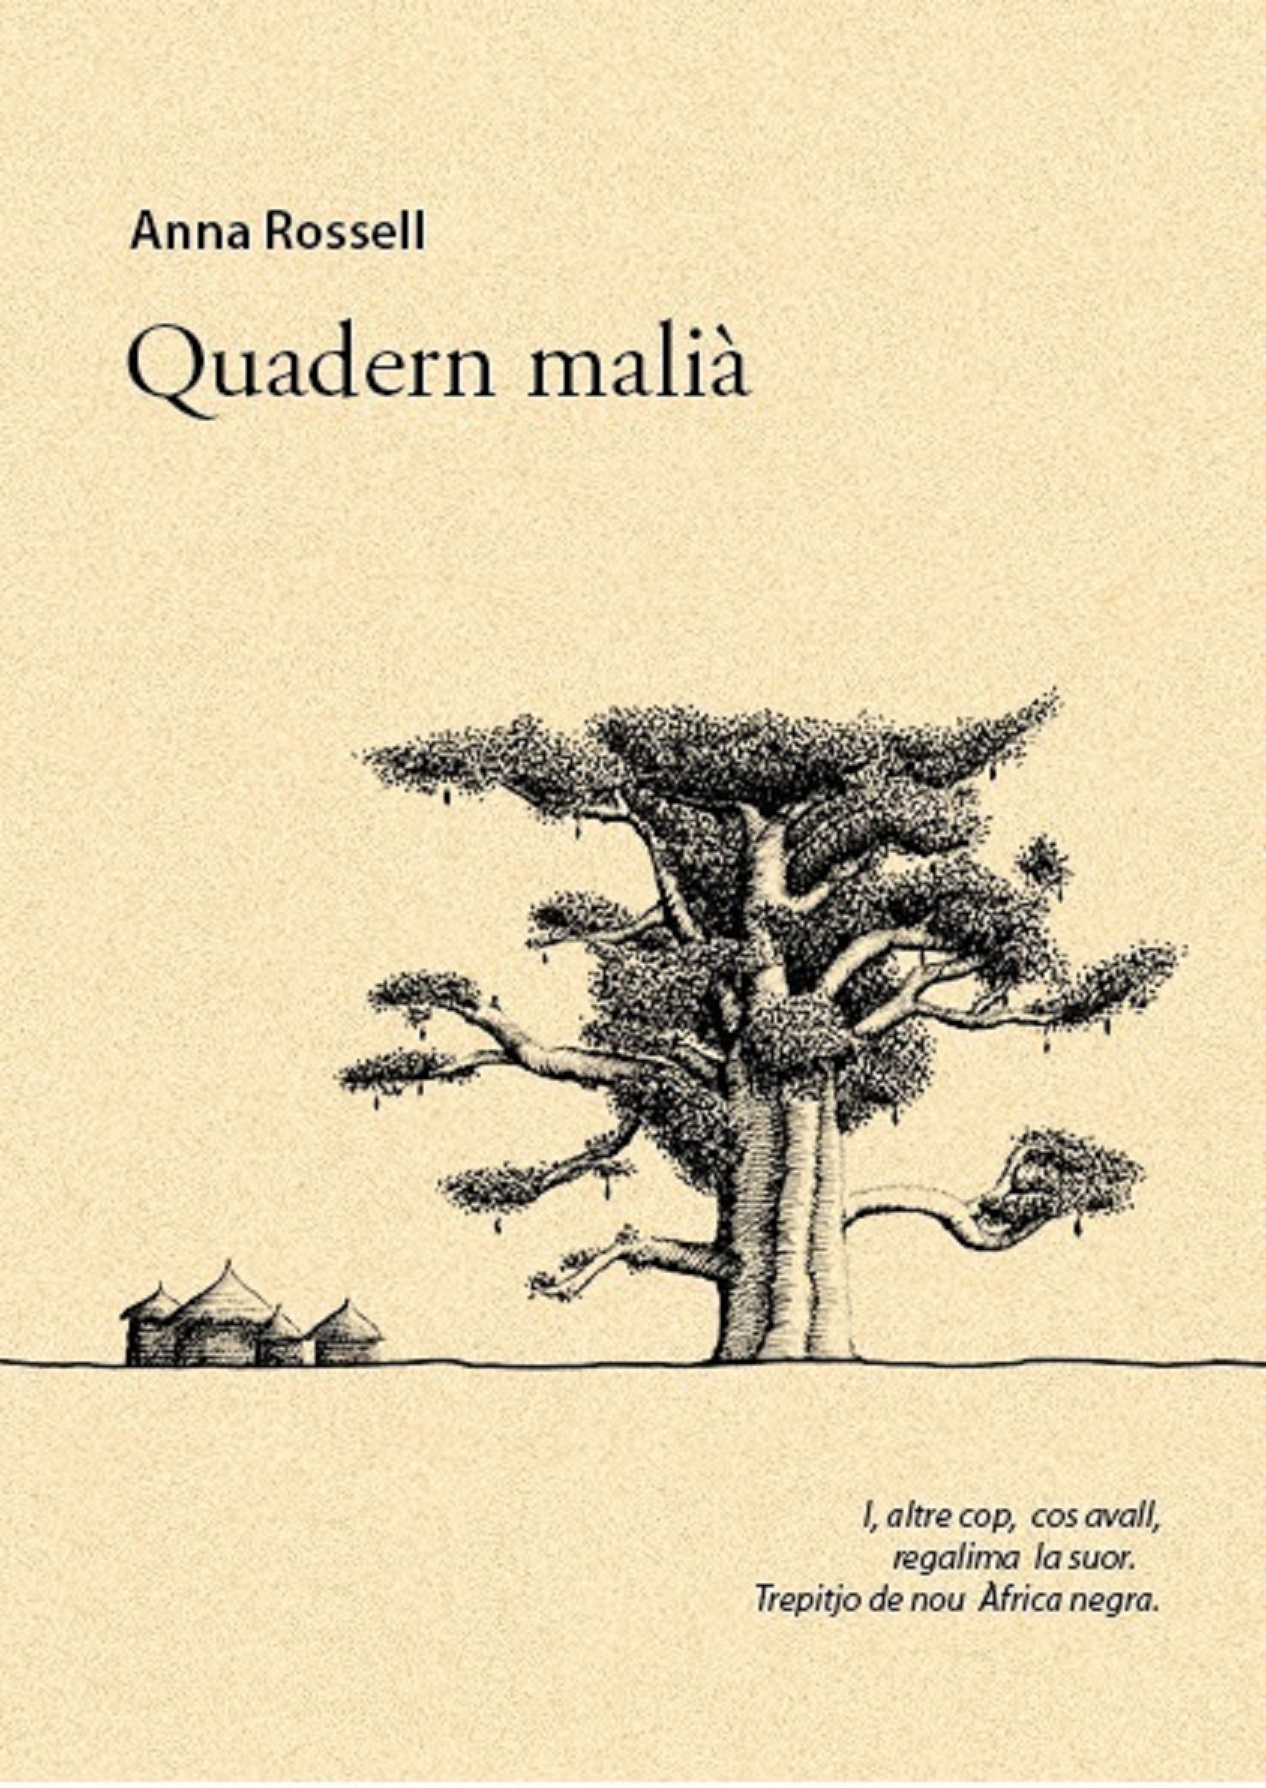 Portada del poemari d'Anna Rossell, "Quadern malià" (e-pub)